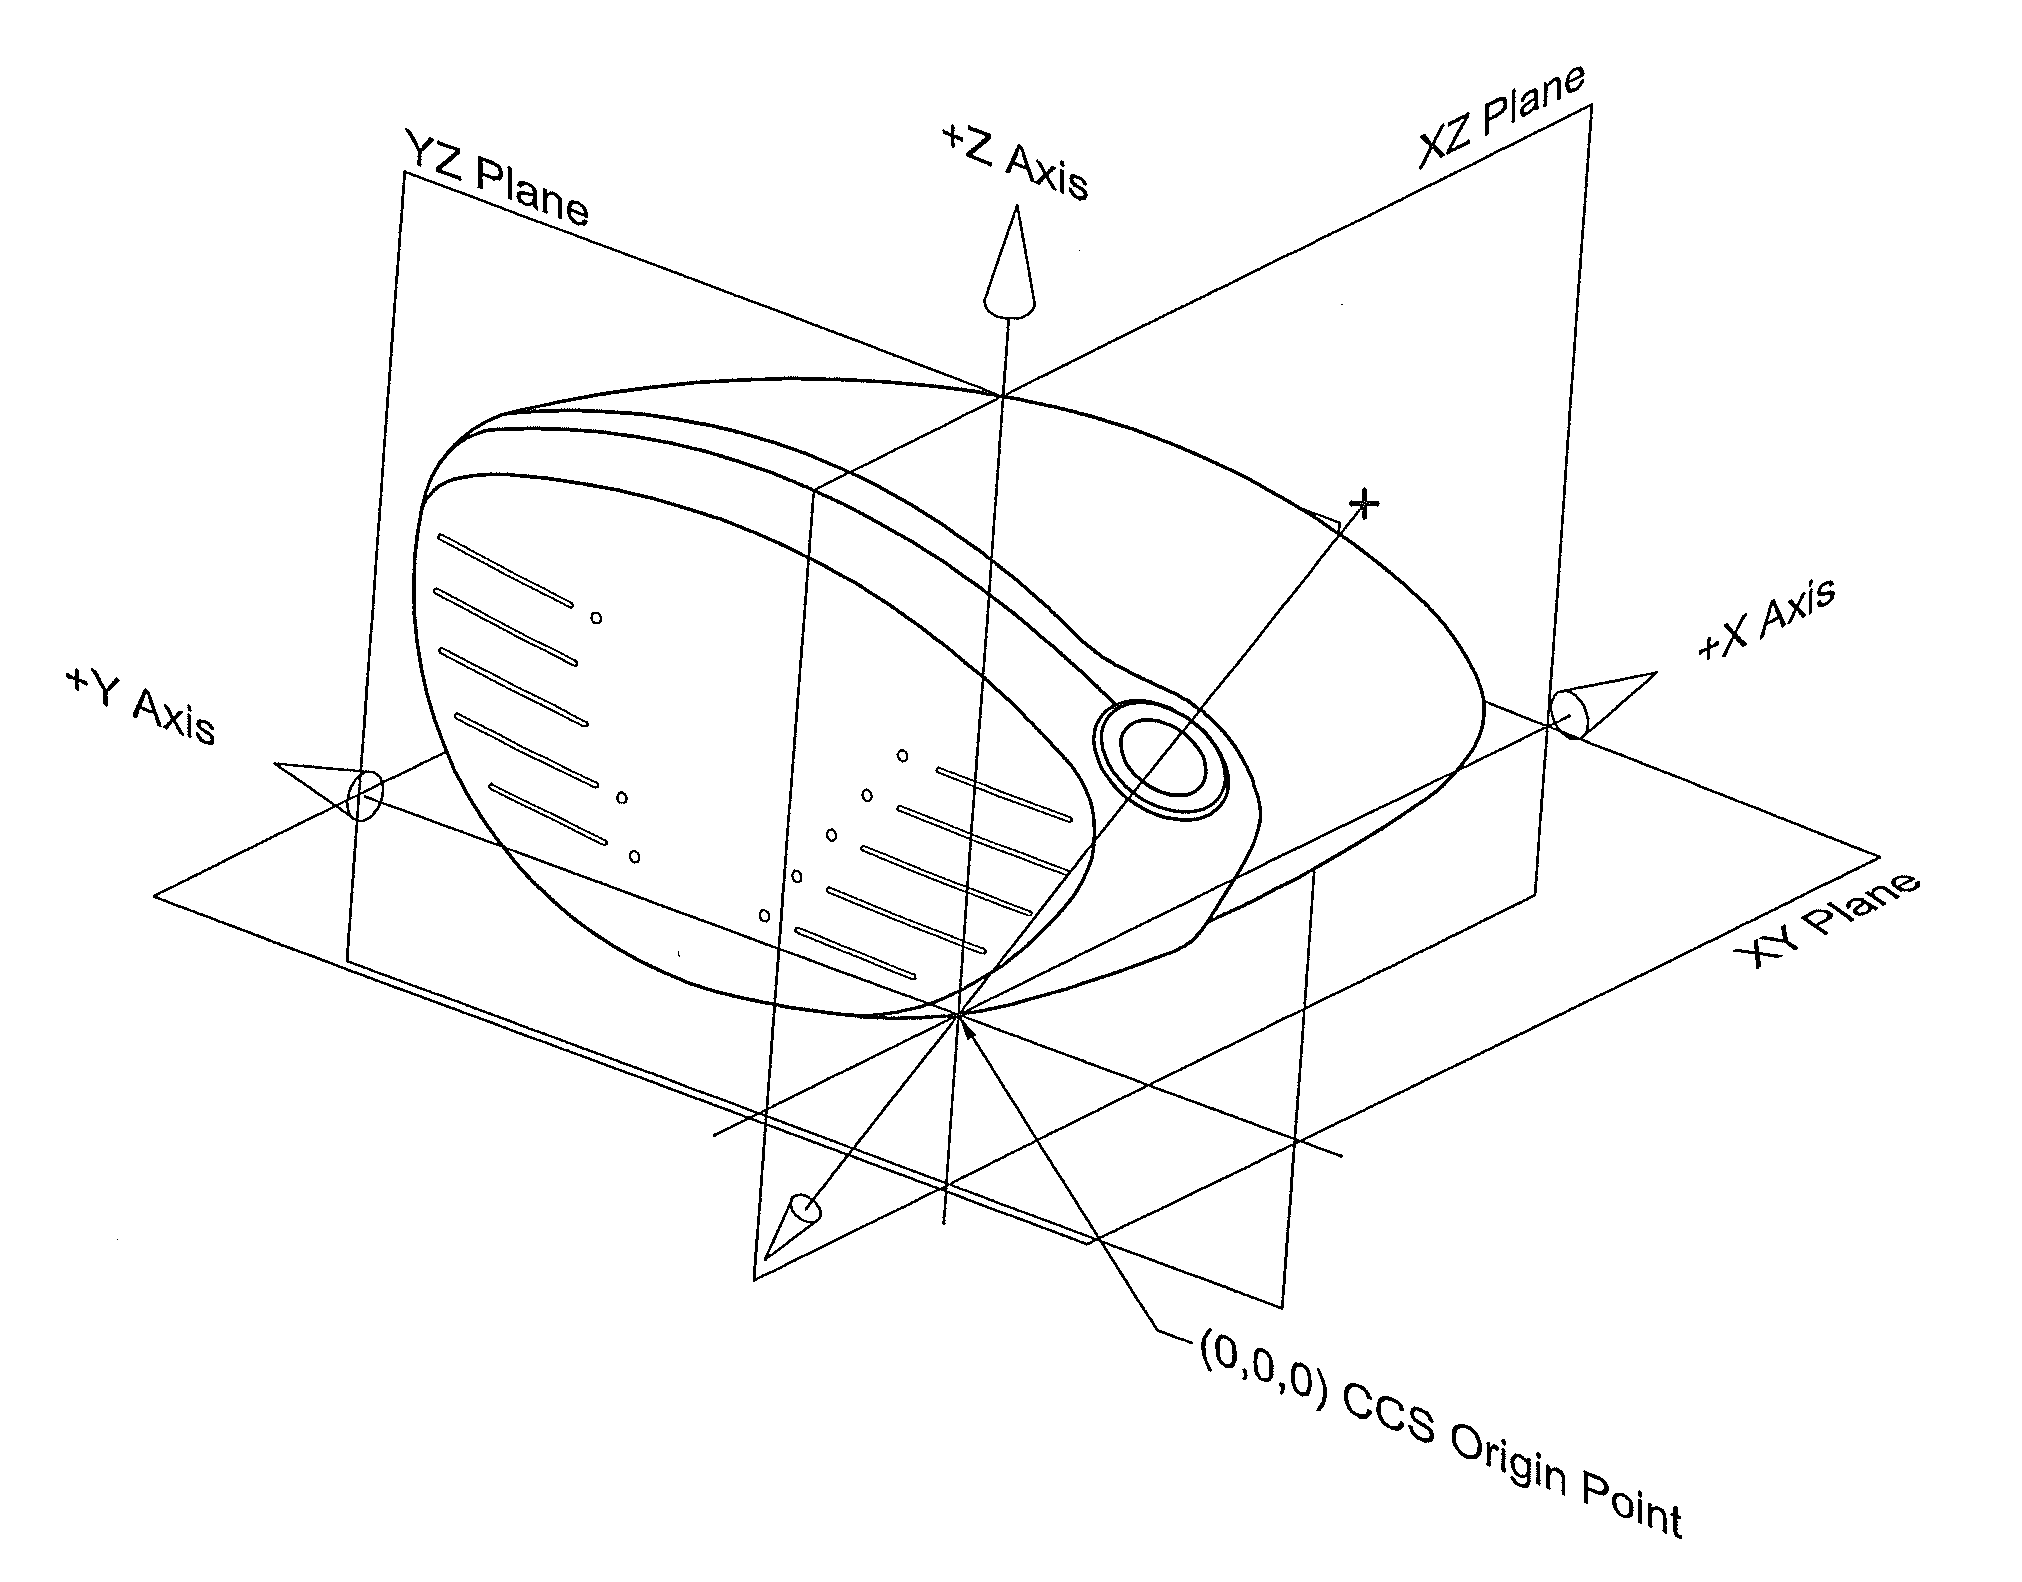 Method of forming a golf club head with improved aerodynamic characteristics